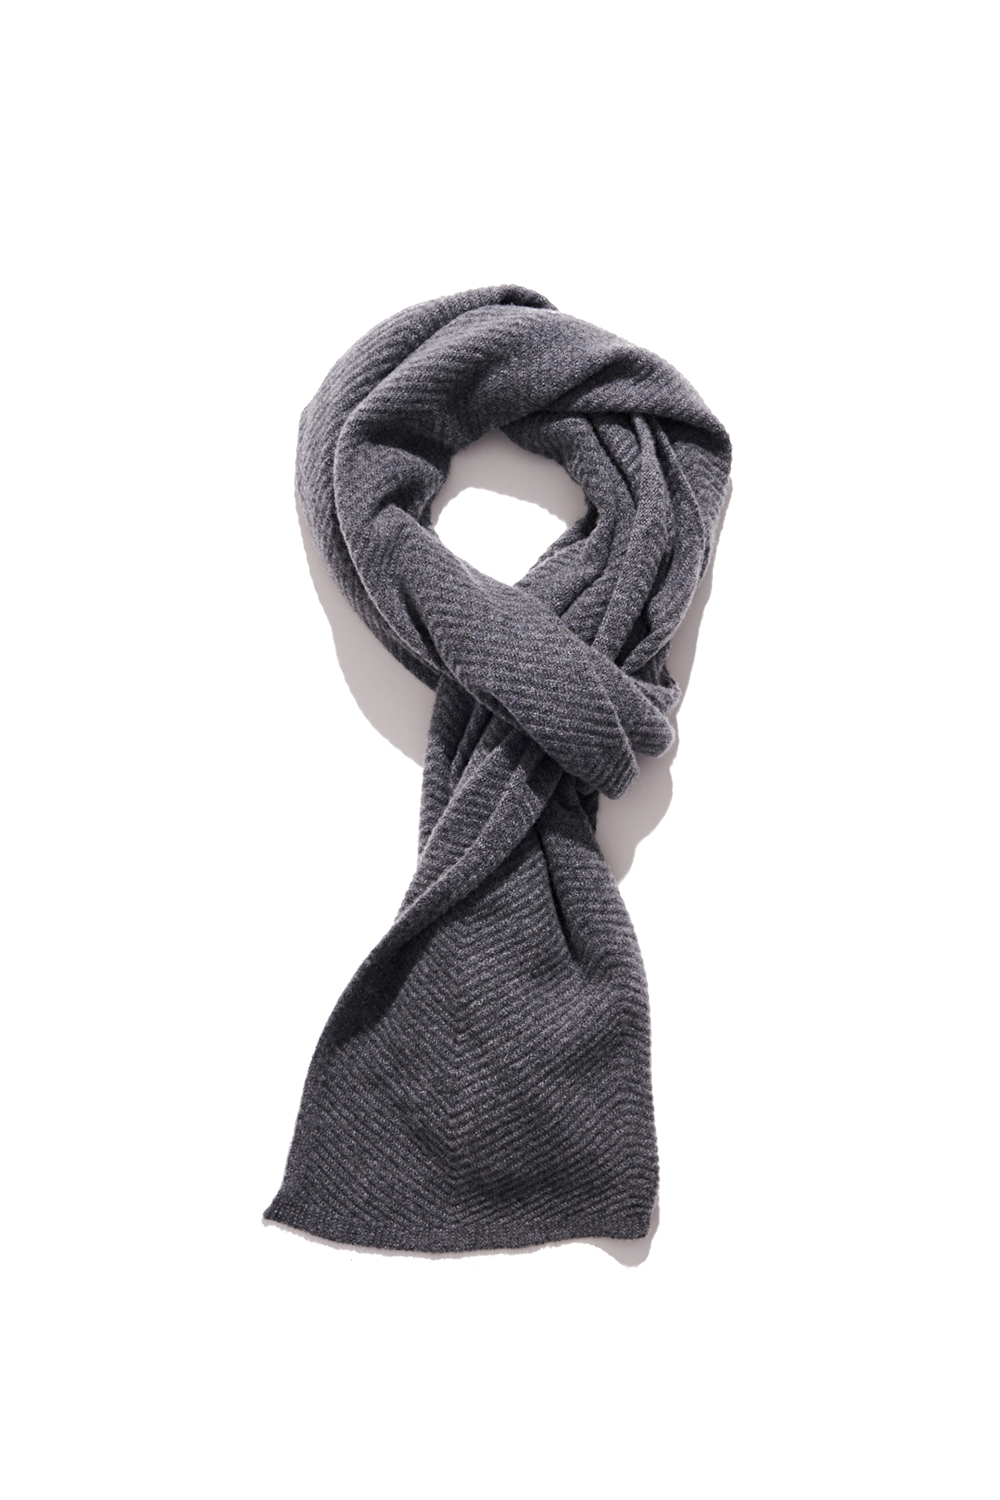 Premium pure cashmere100 whole-garment knitting shawl and scarf - Dark gray